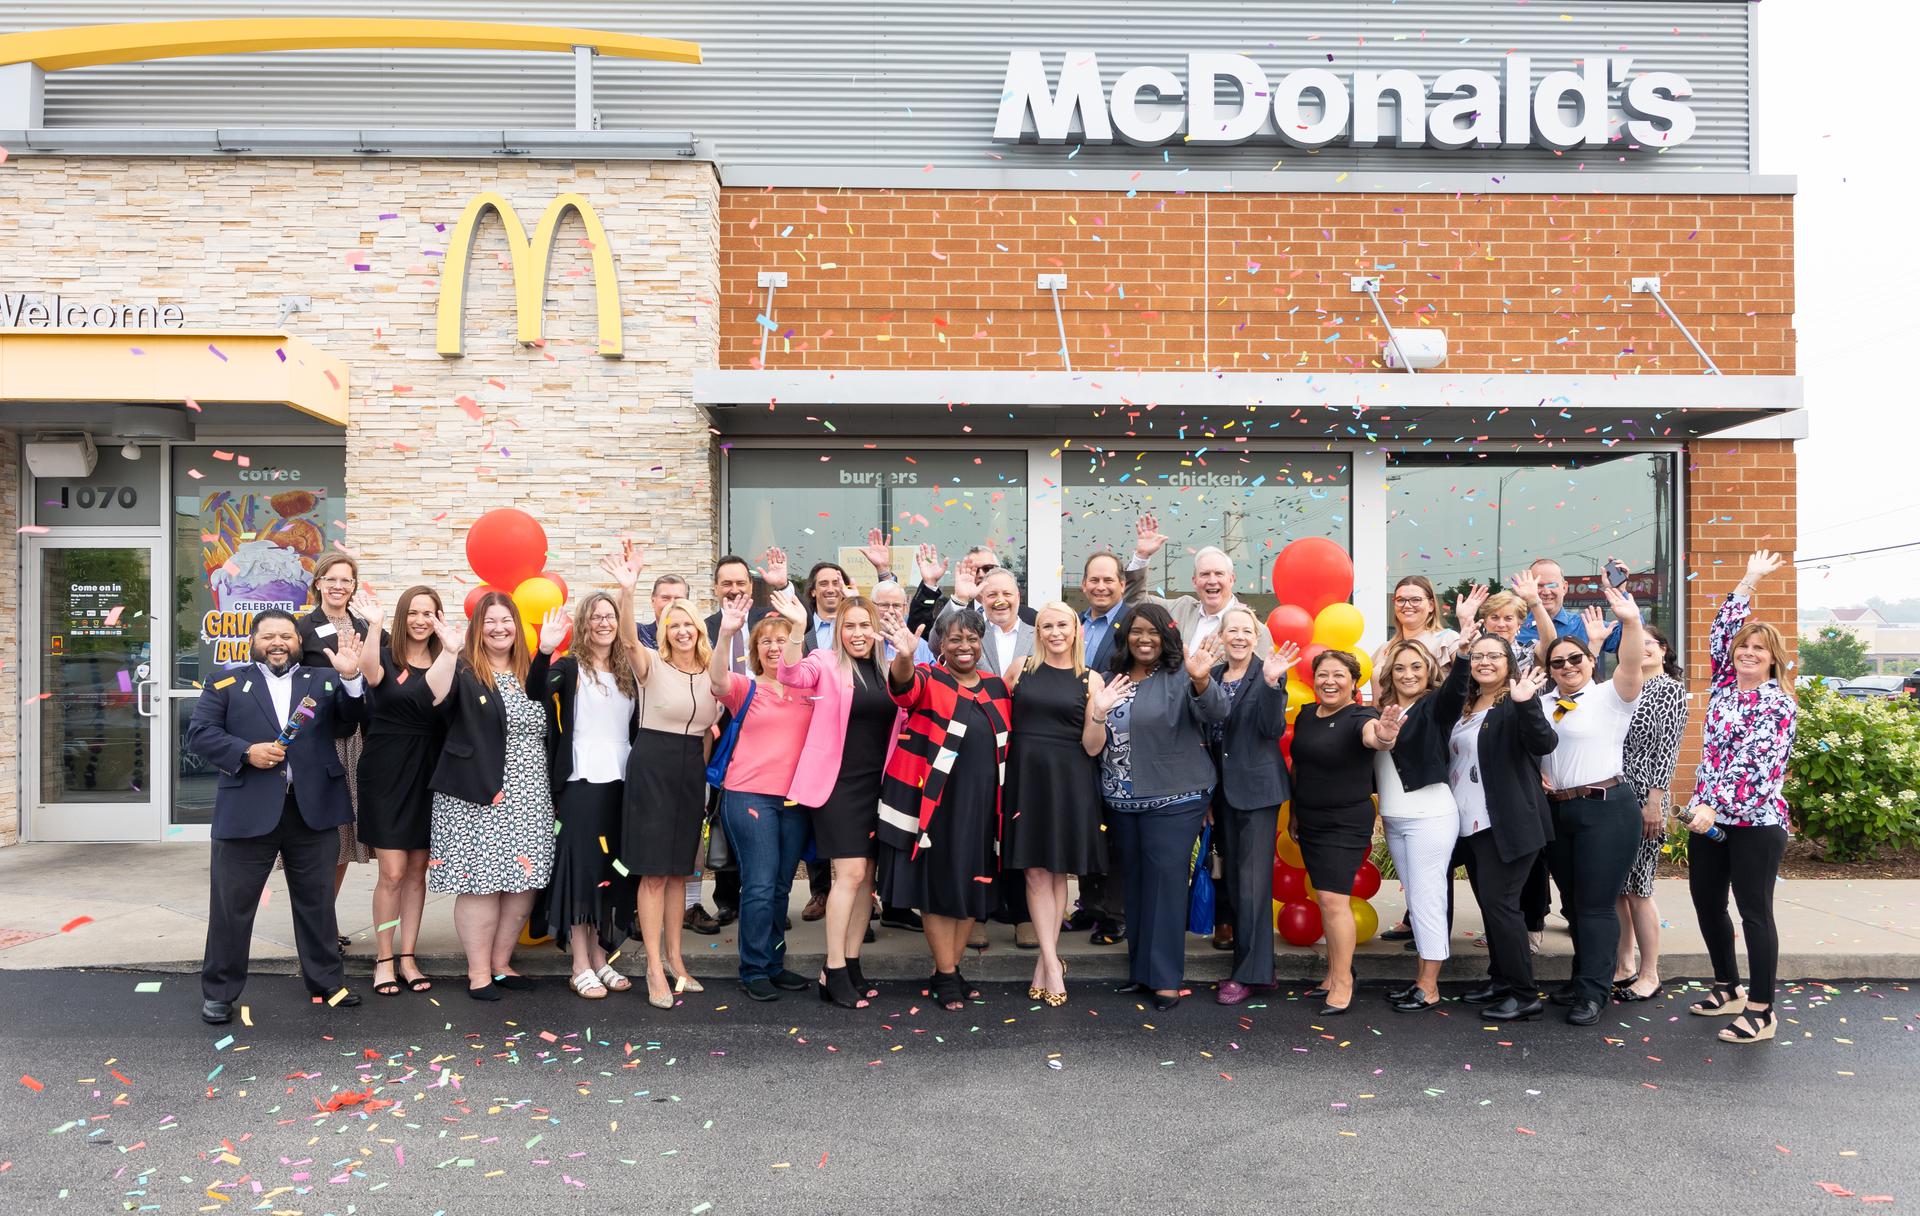 Bear Family McDonald's Restaurants and Harper representatives celebrate their partnership